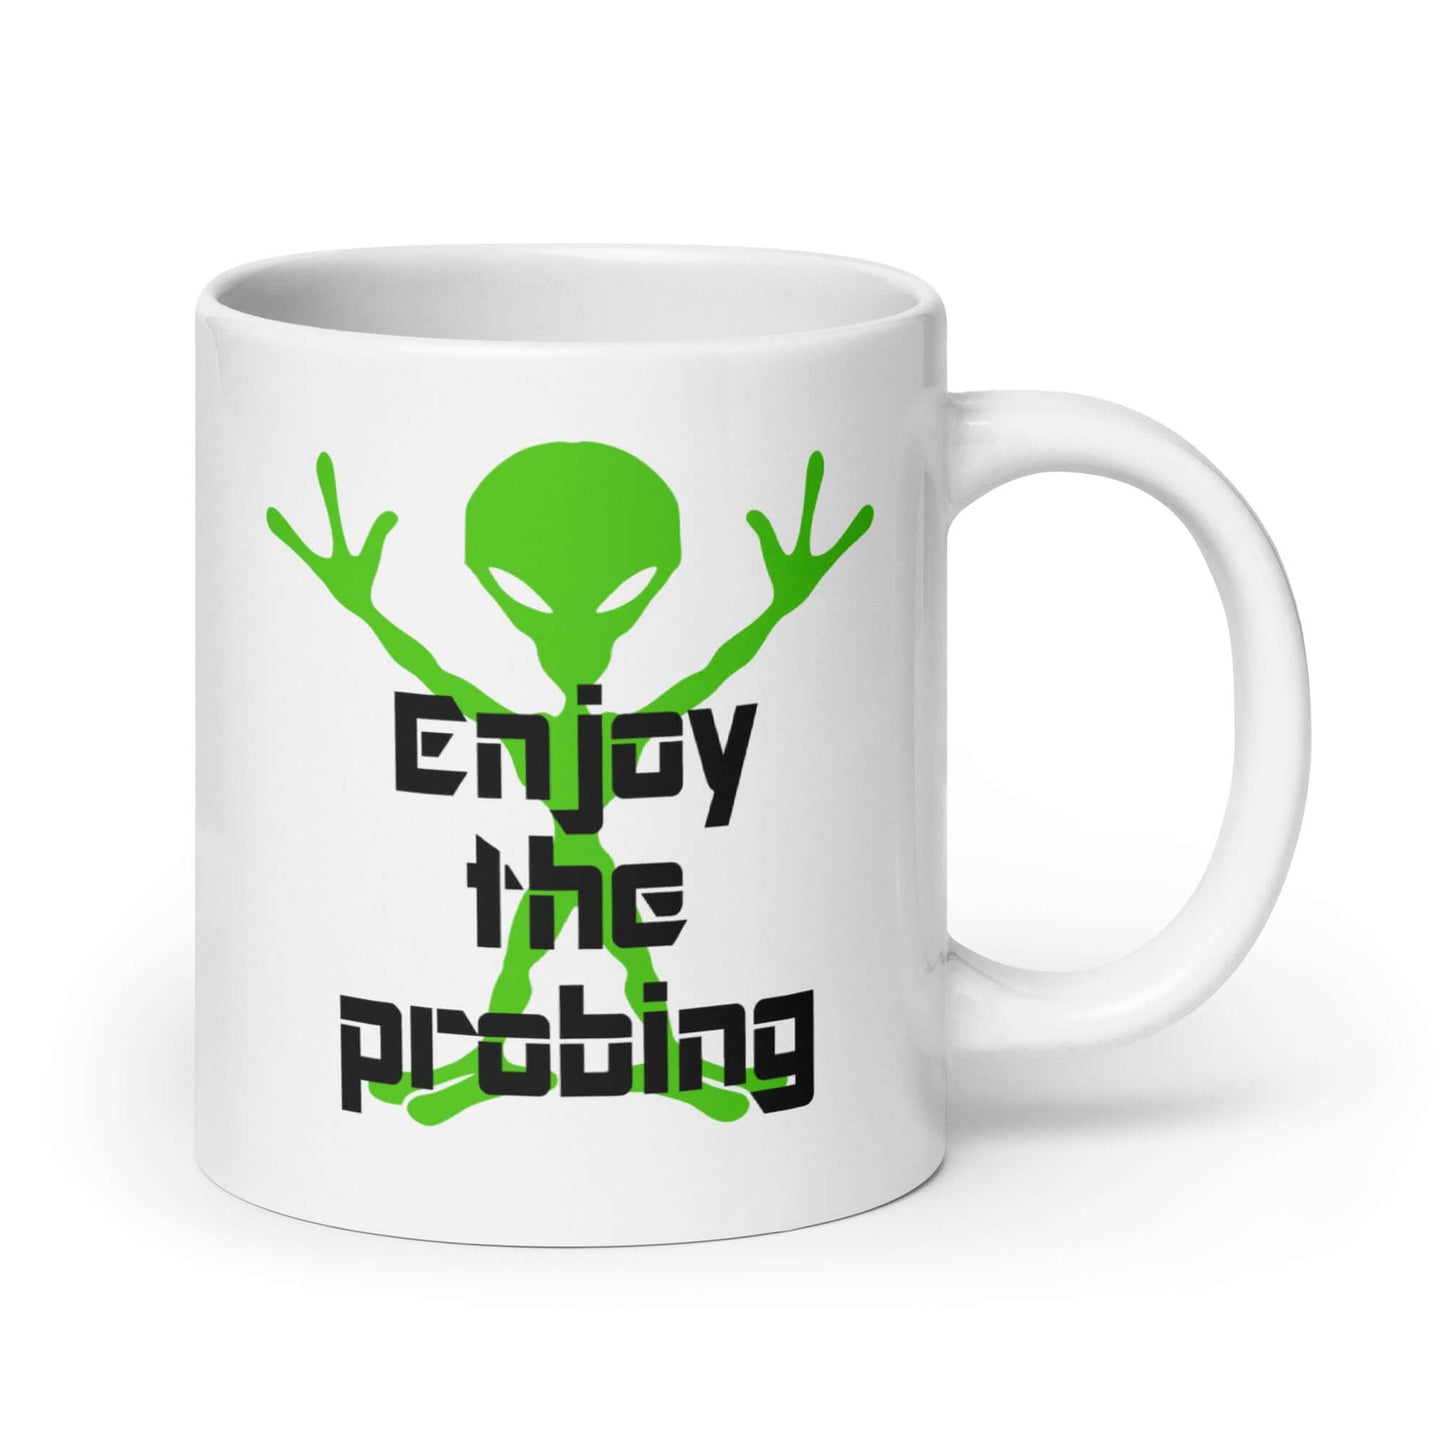 Funny alien abduction anal probing joke mug